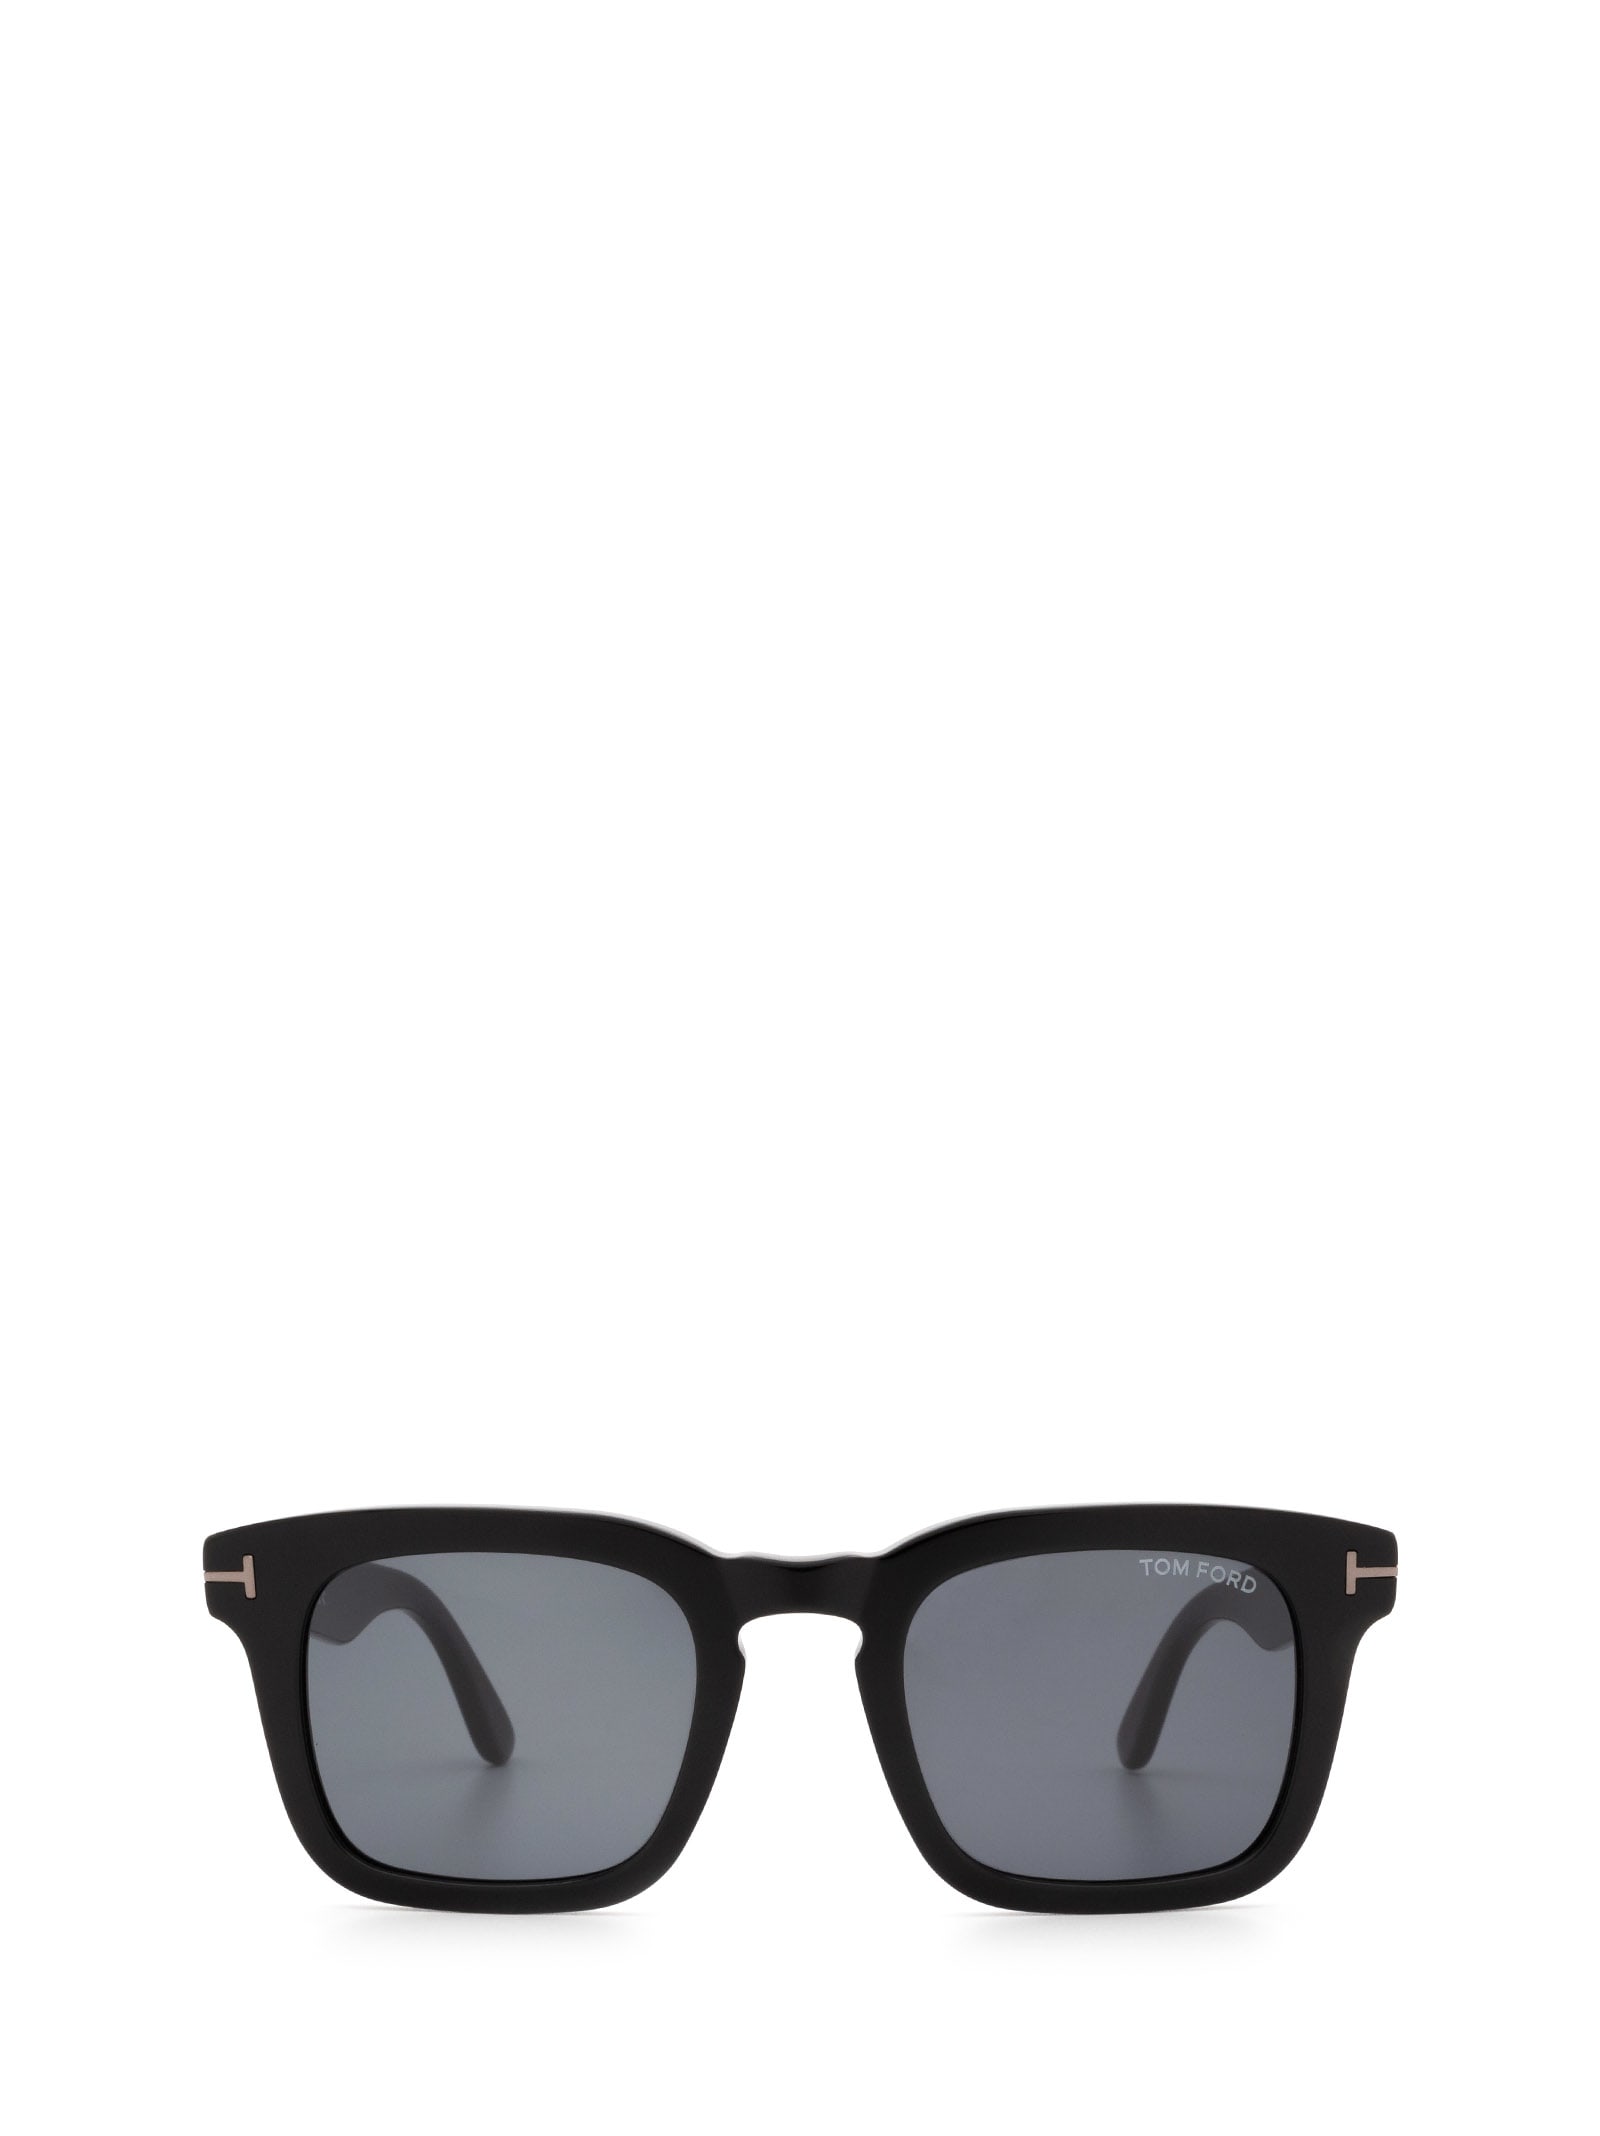 Tom Ford Ft0751-n Shiny Black Sunglasses